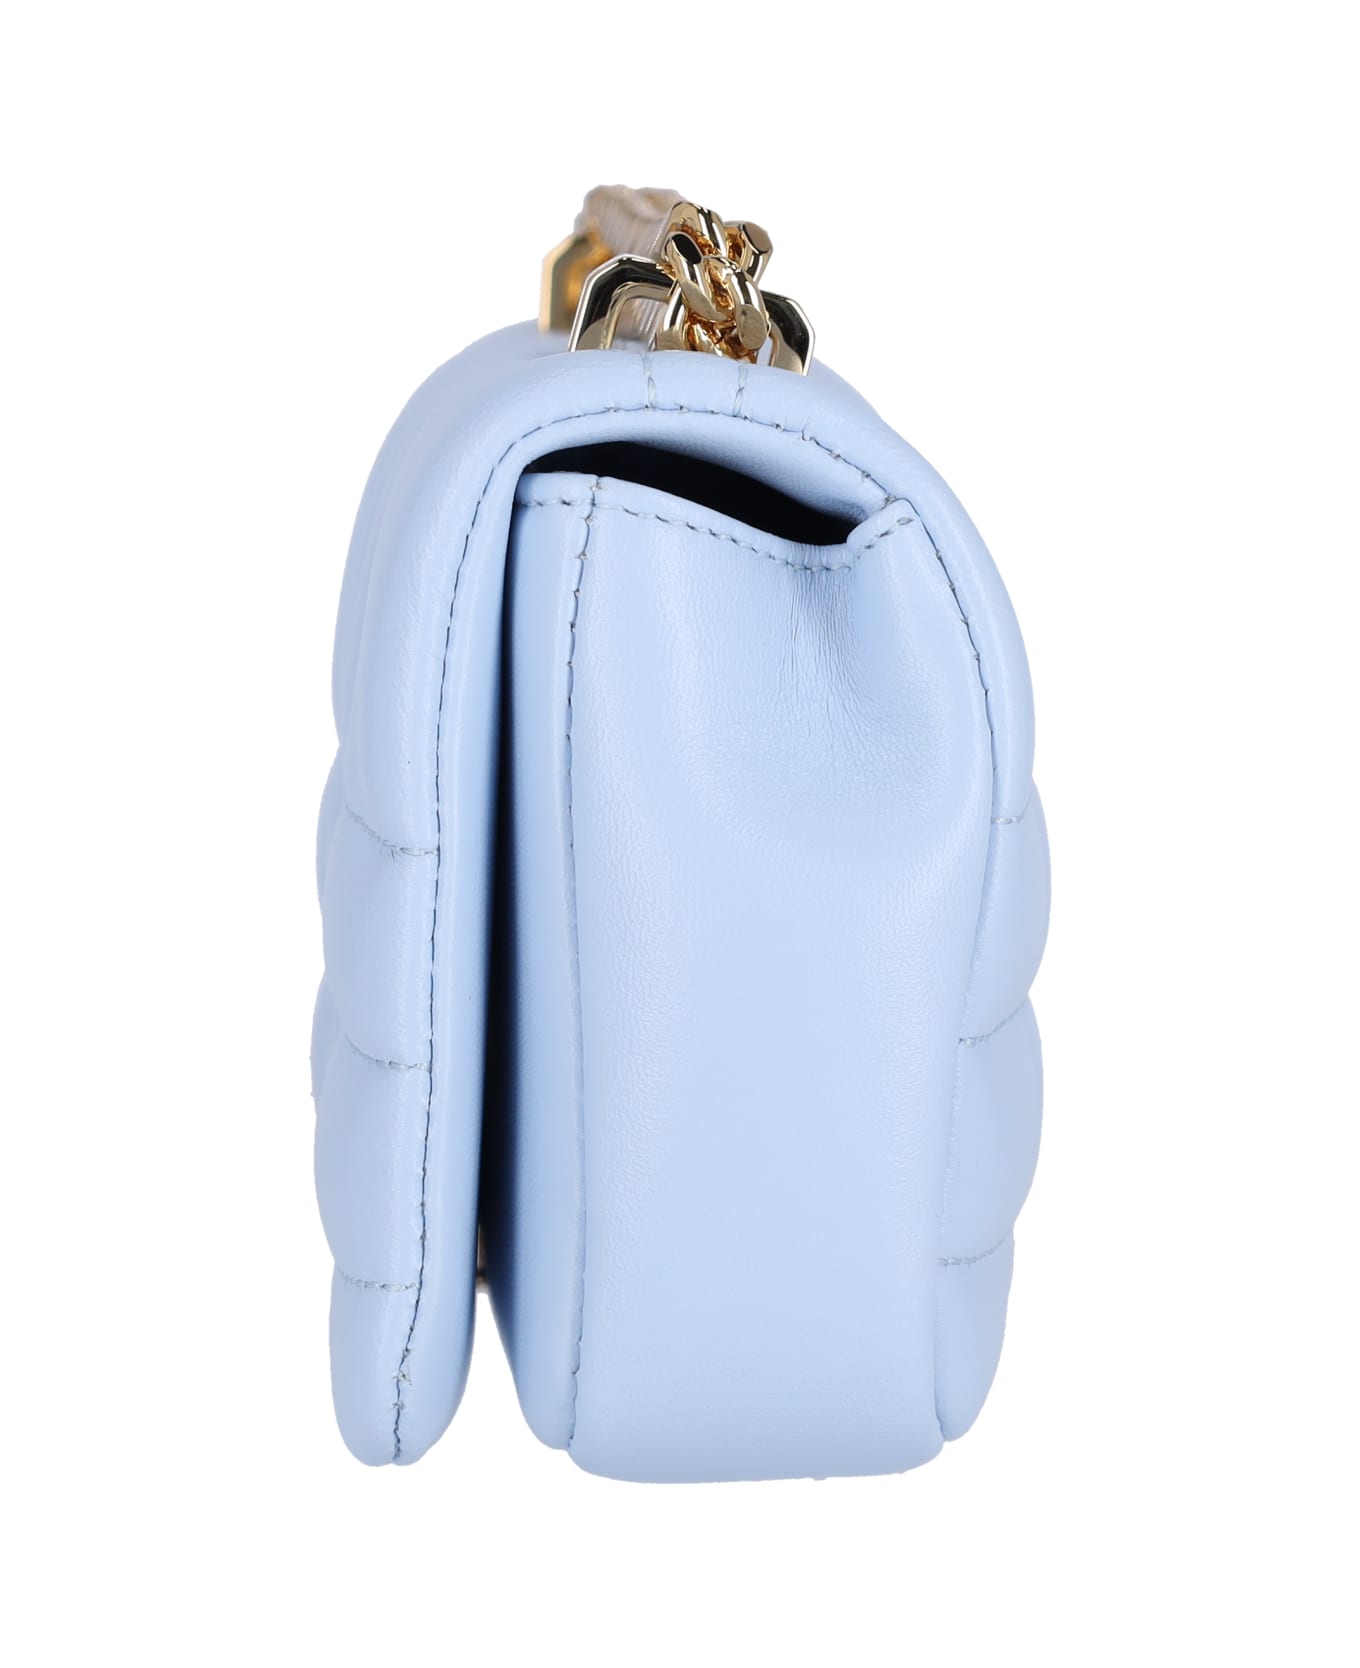 Burberry Light Blue Leather Mini Lola Shoulder Bag - Light blue